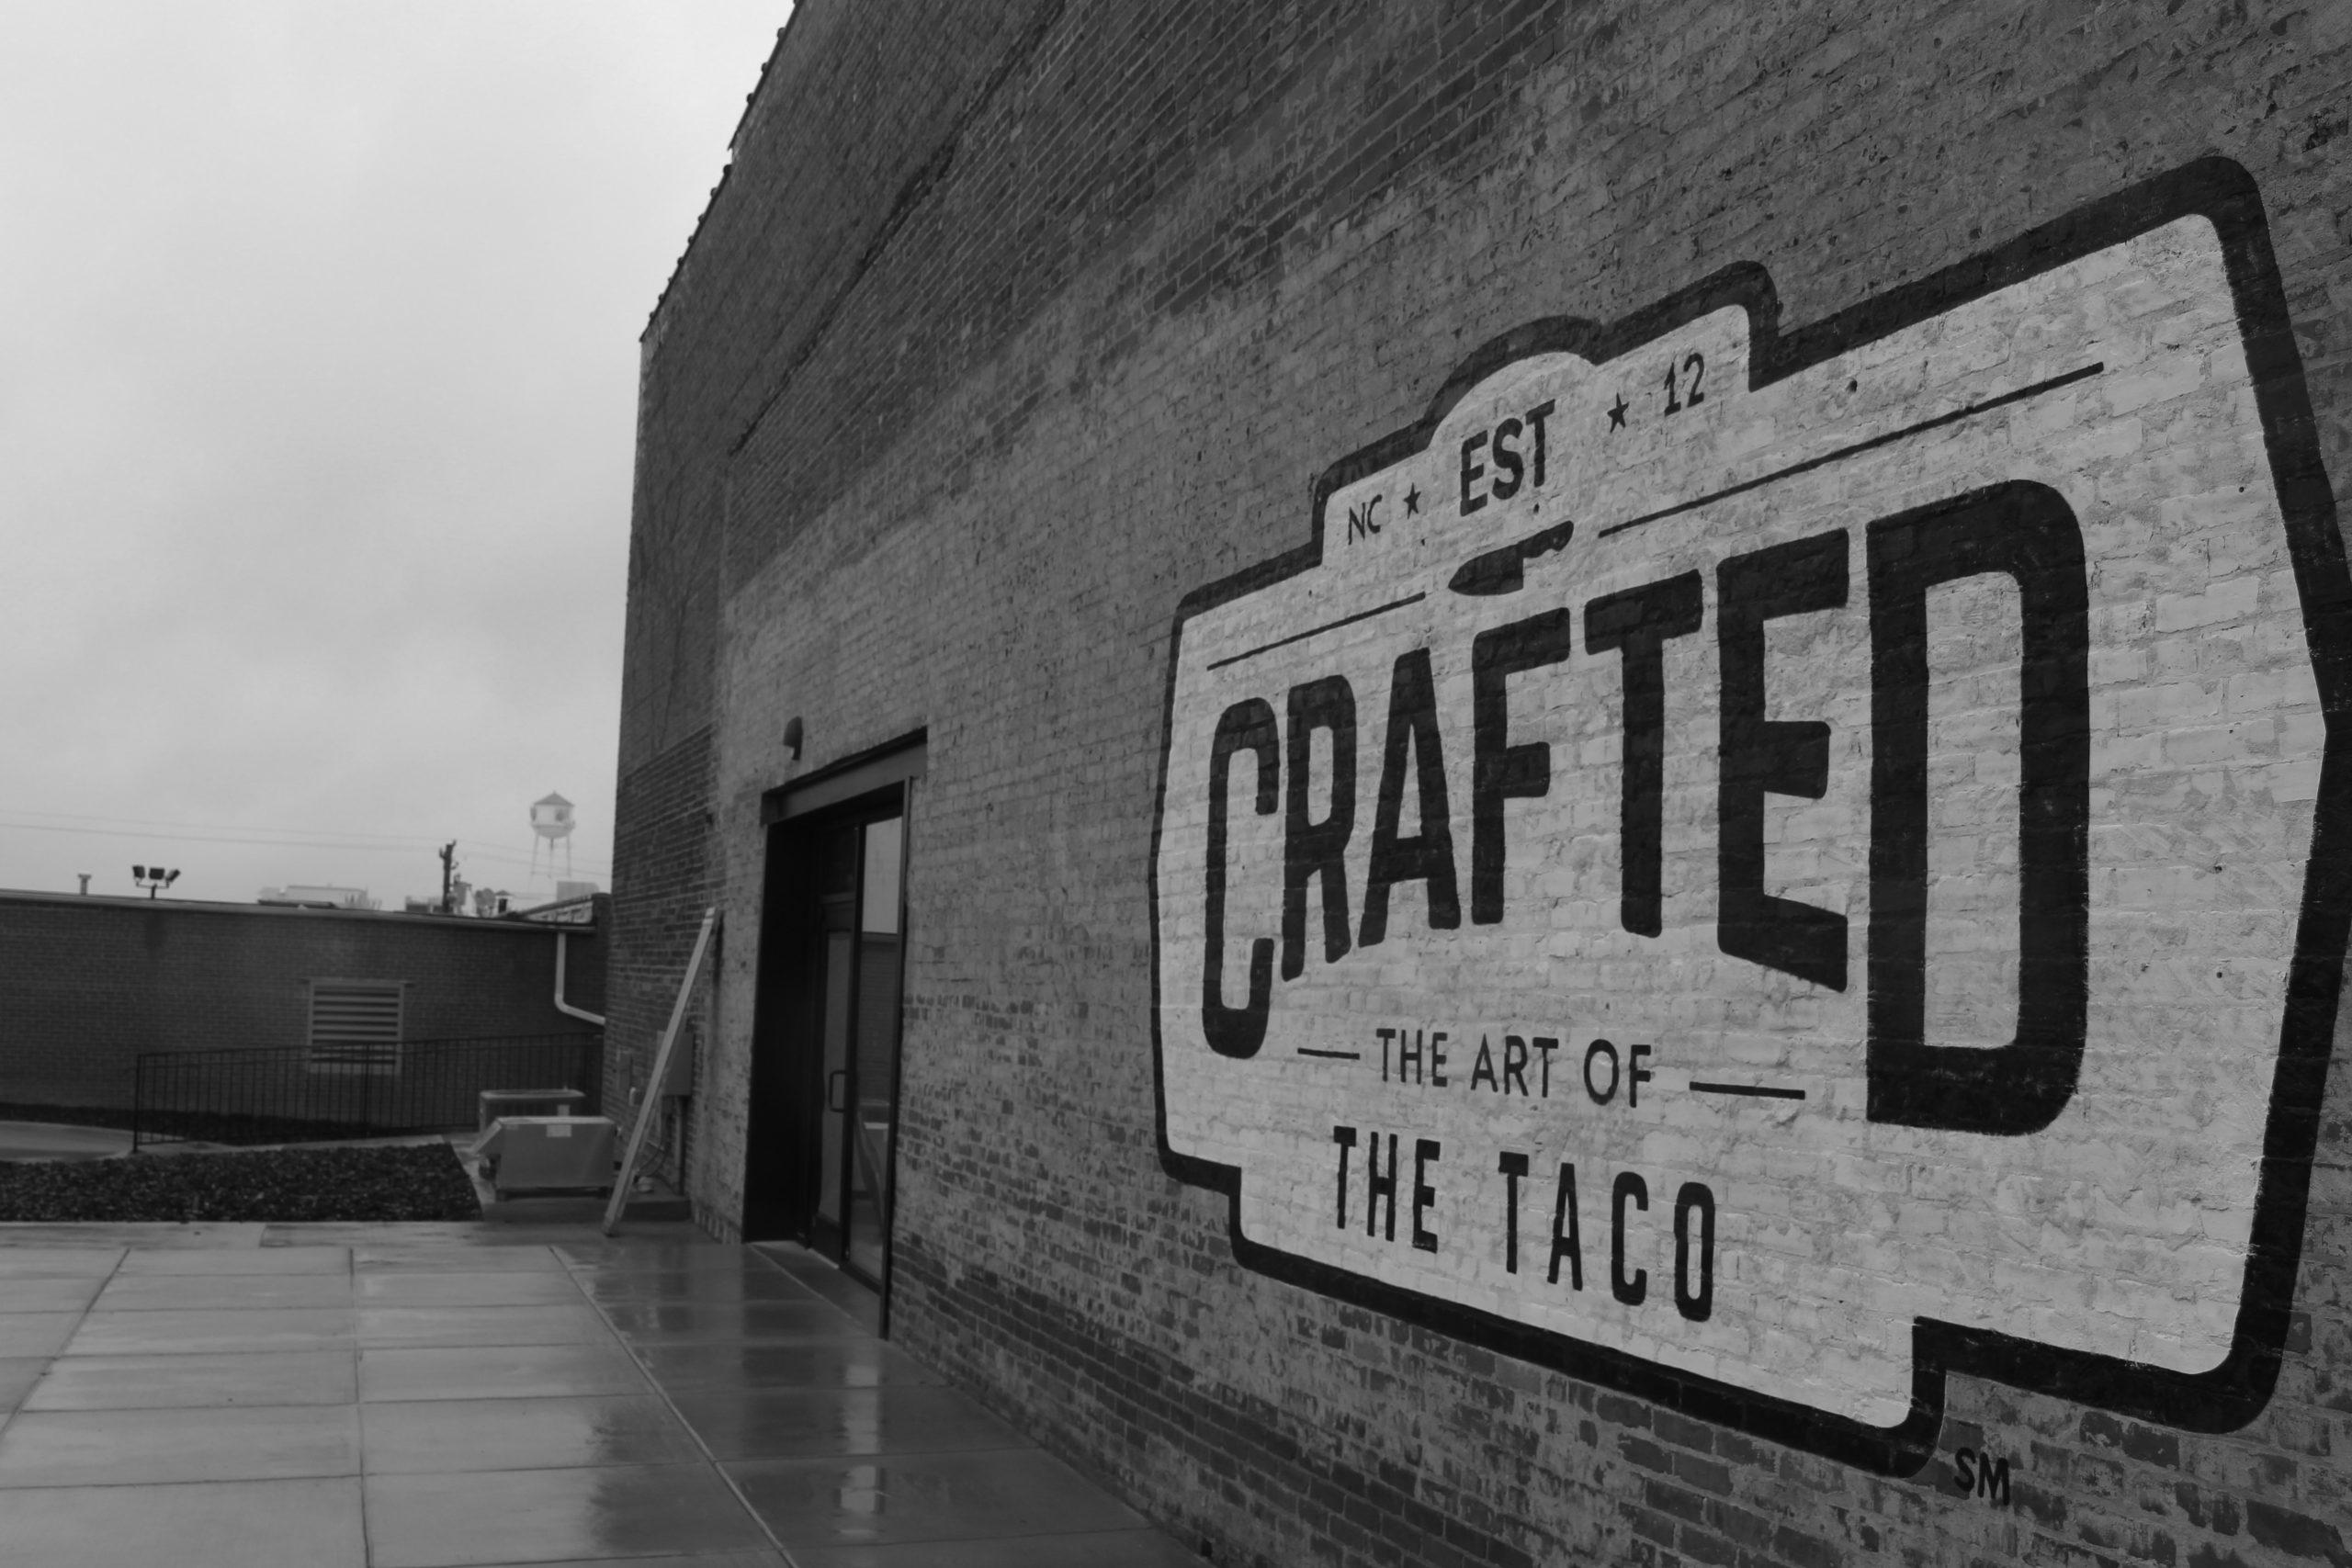 Taco chain to open location near Innovation Quarter